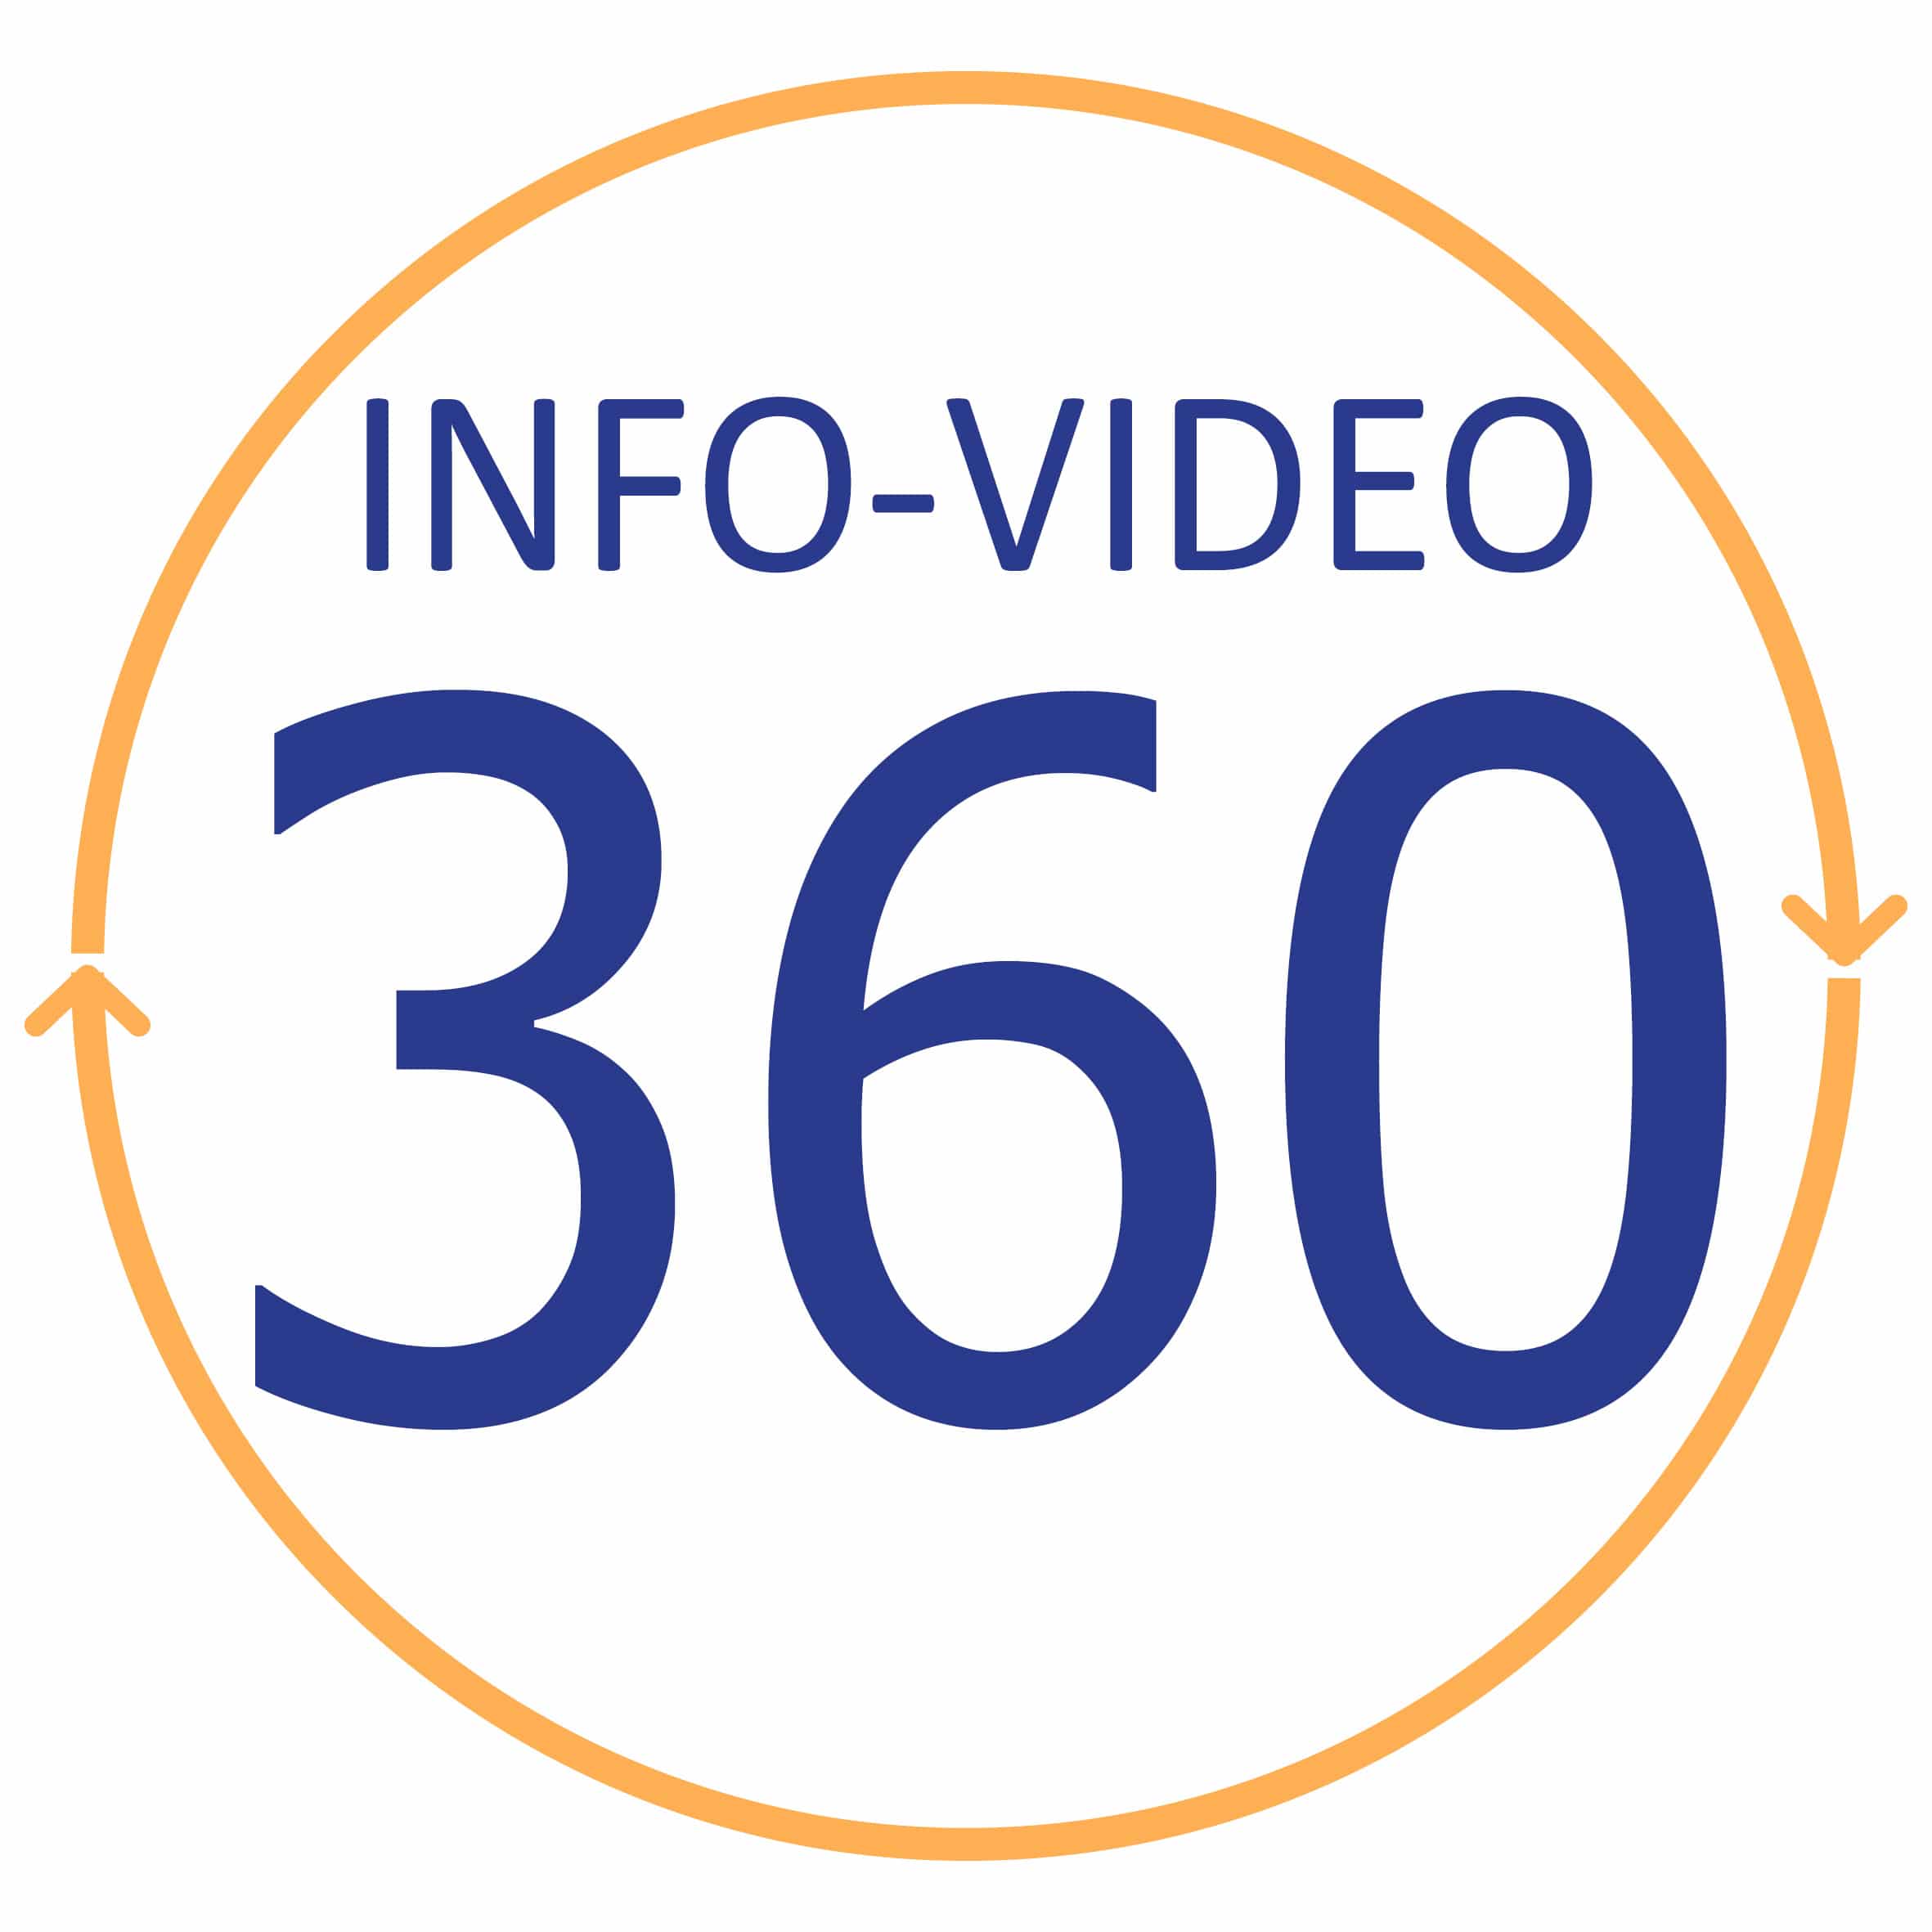 INFO-VIDEO360